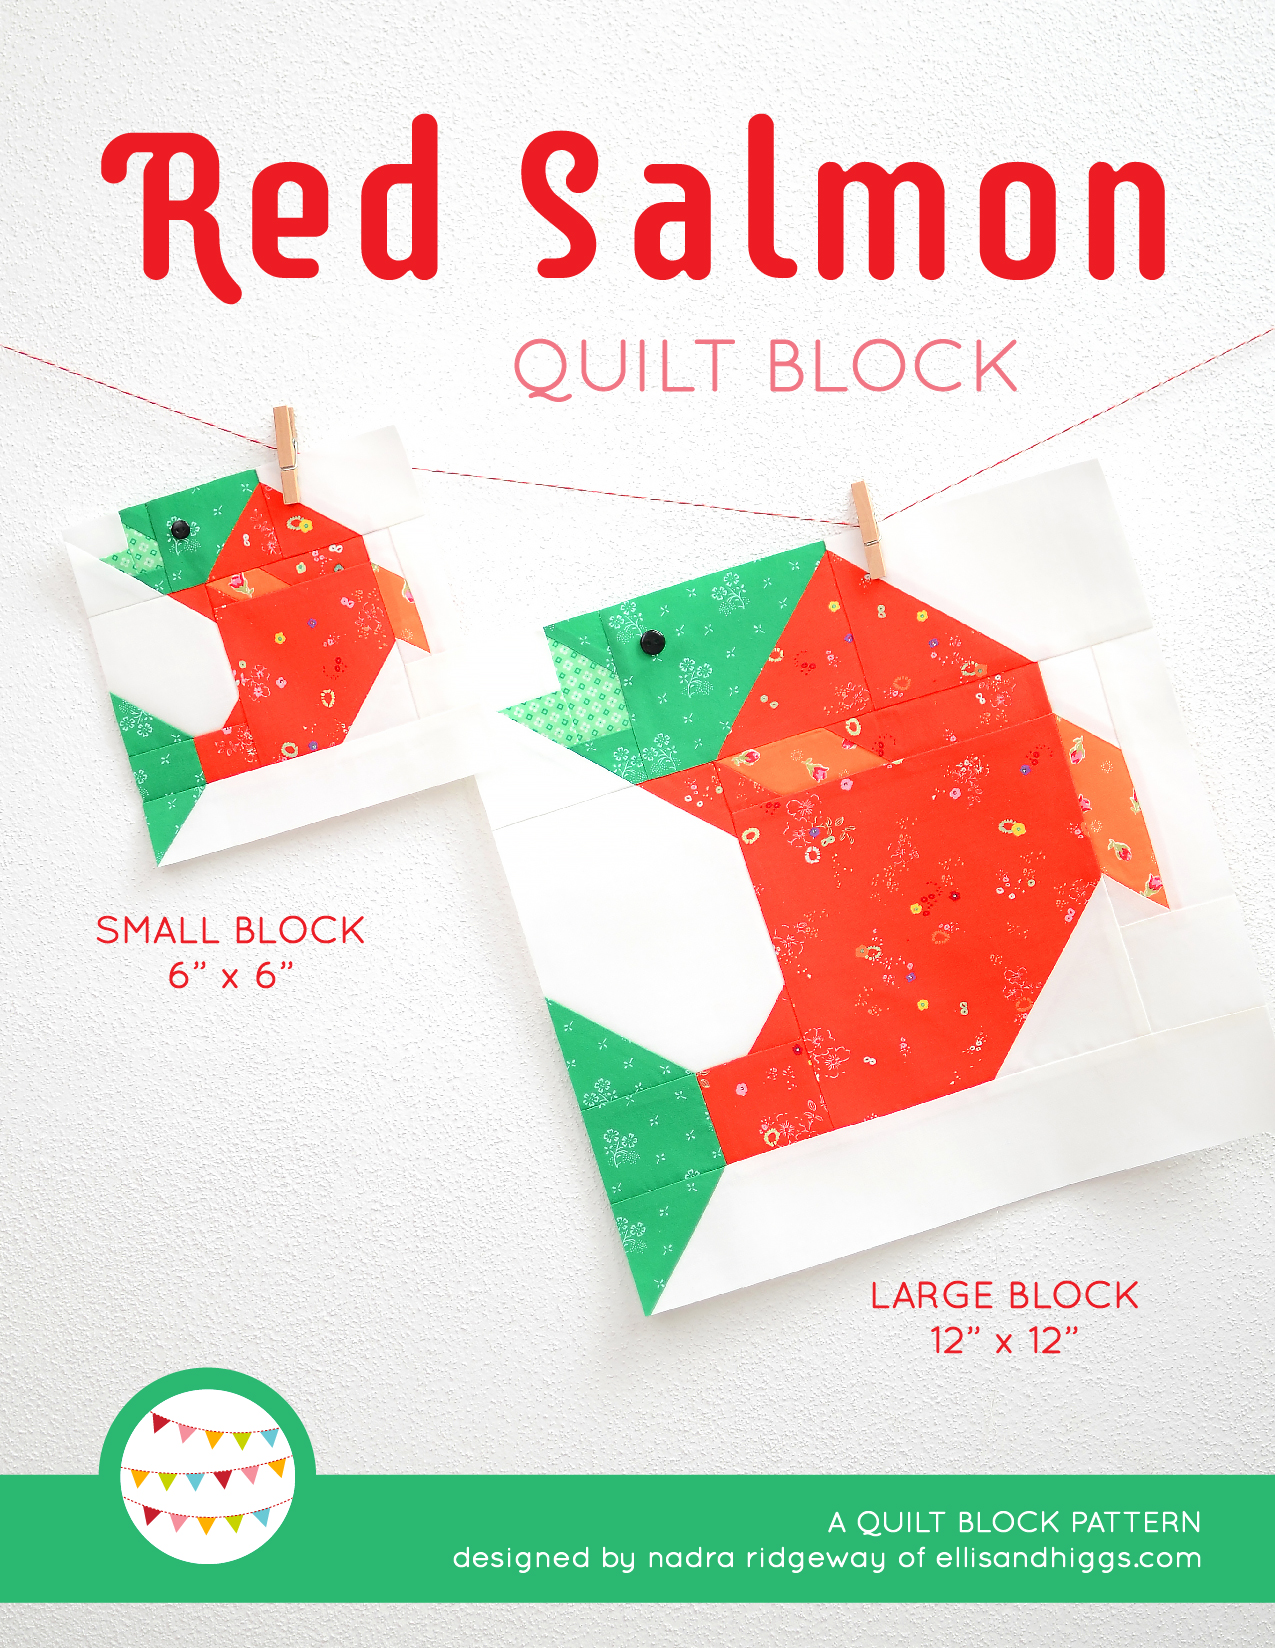 Summer quilt patterns - Red Salmon quilt pattern